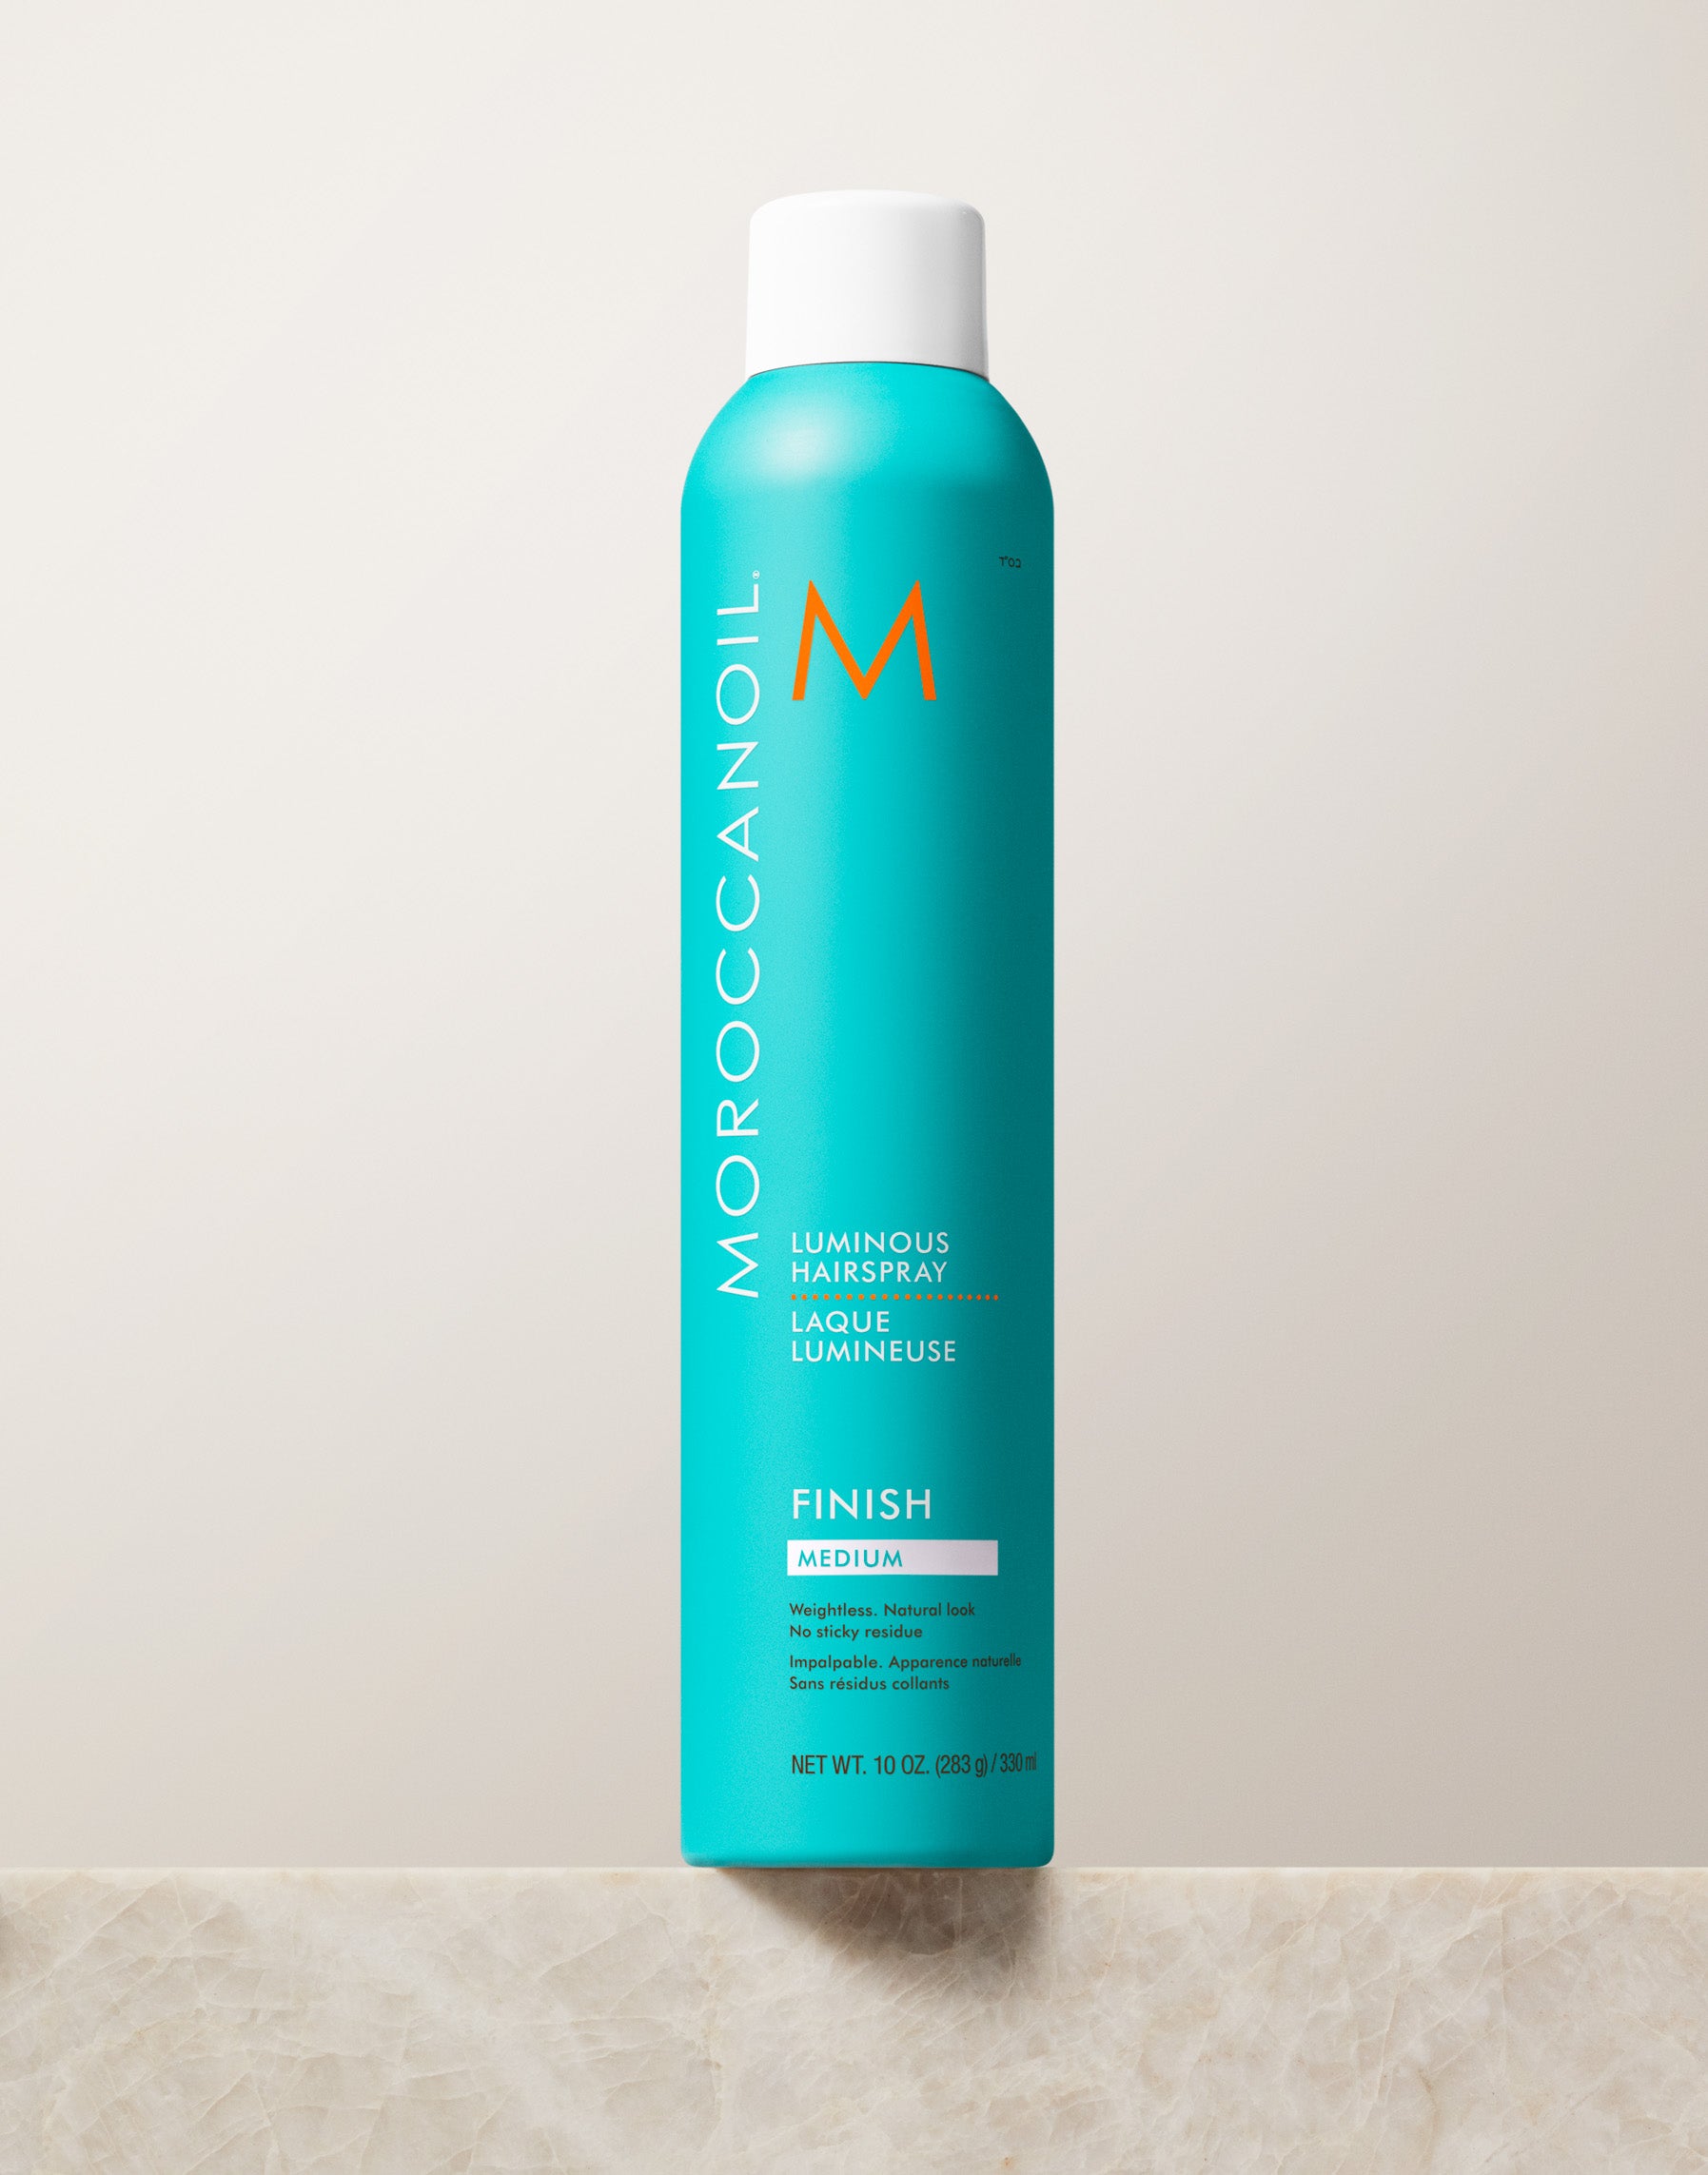 Aqua Net Extra Super Hold Hairspray (aerosol can) - Reviews